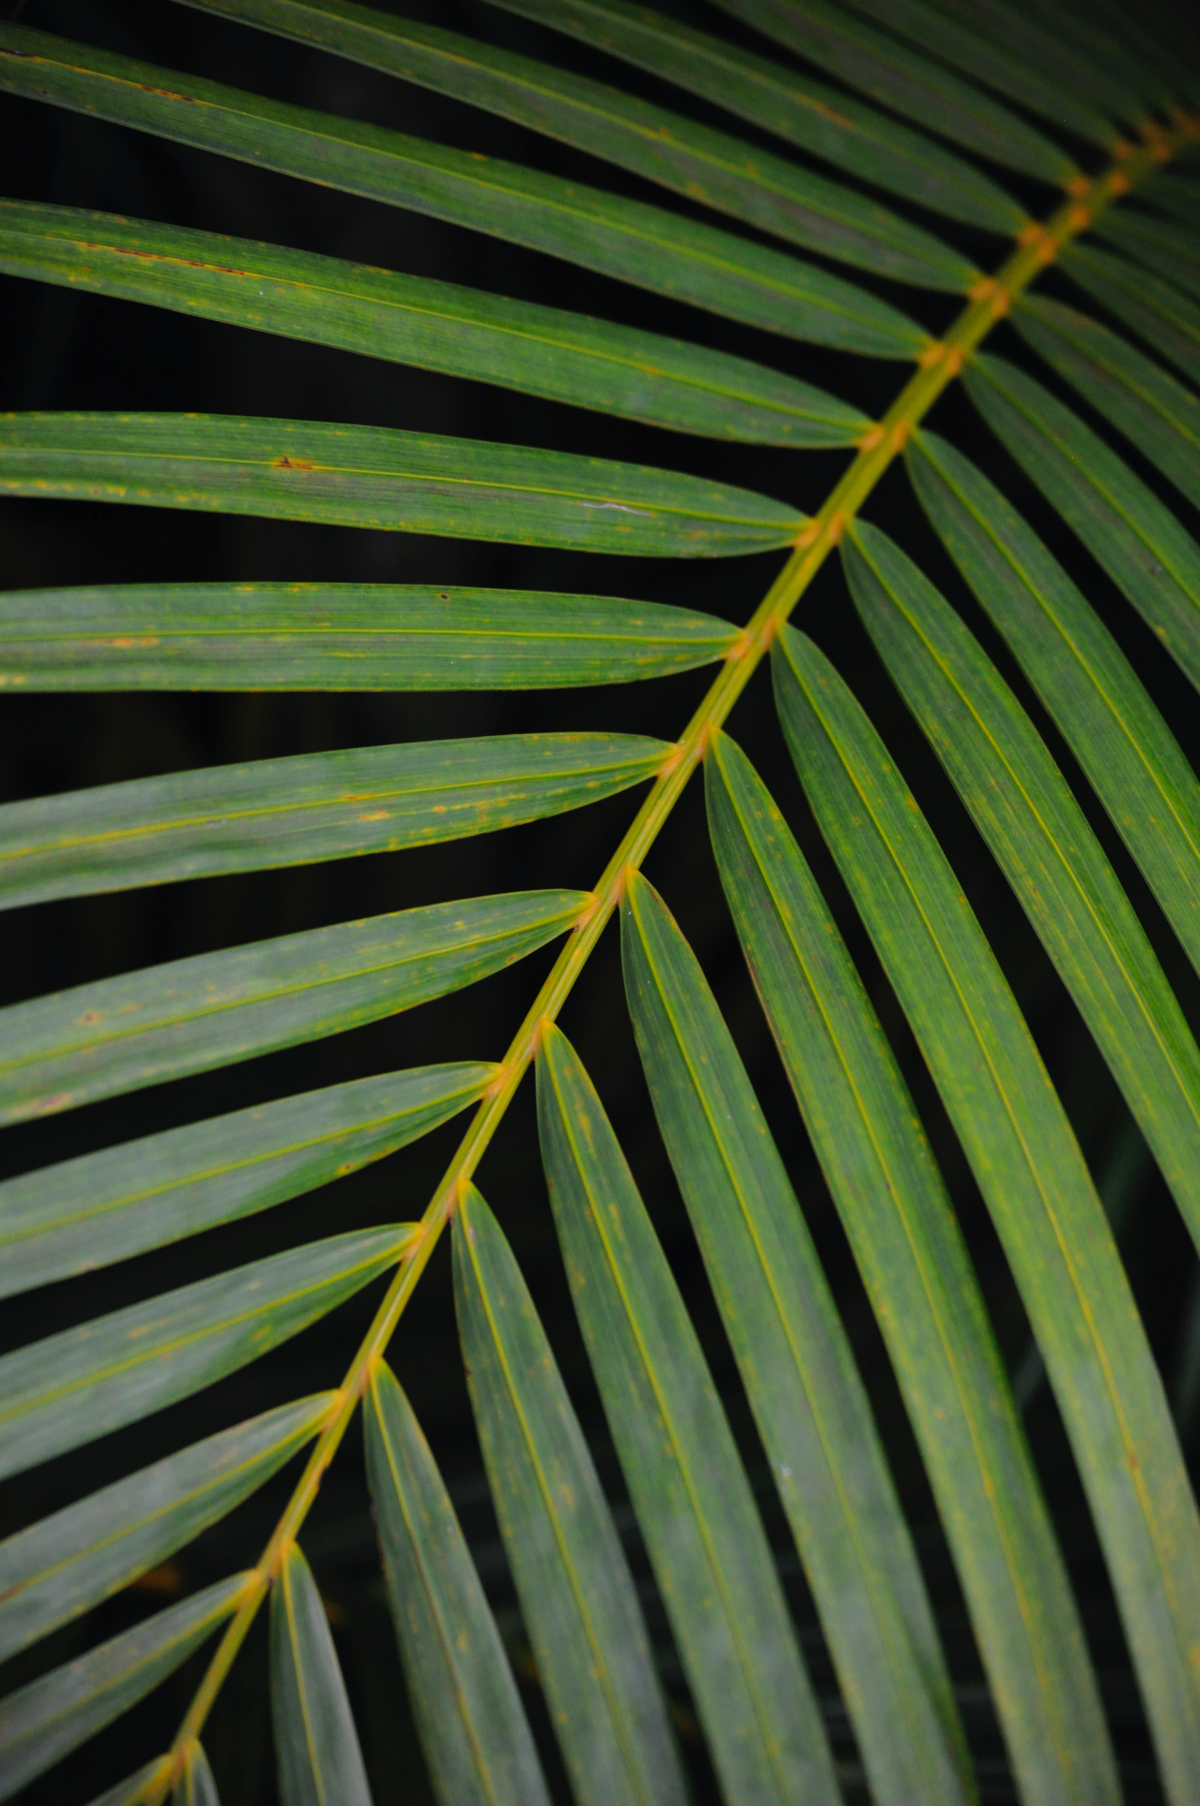 close up of palm leaf